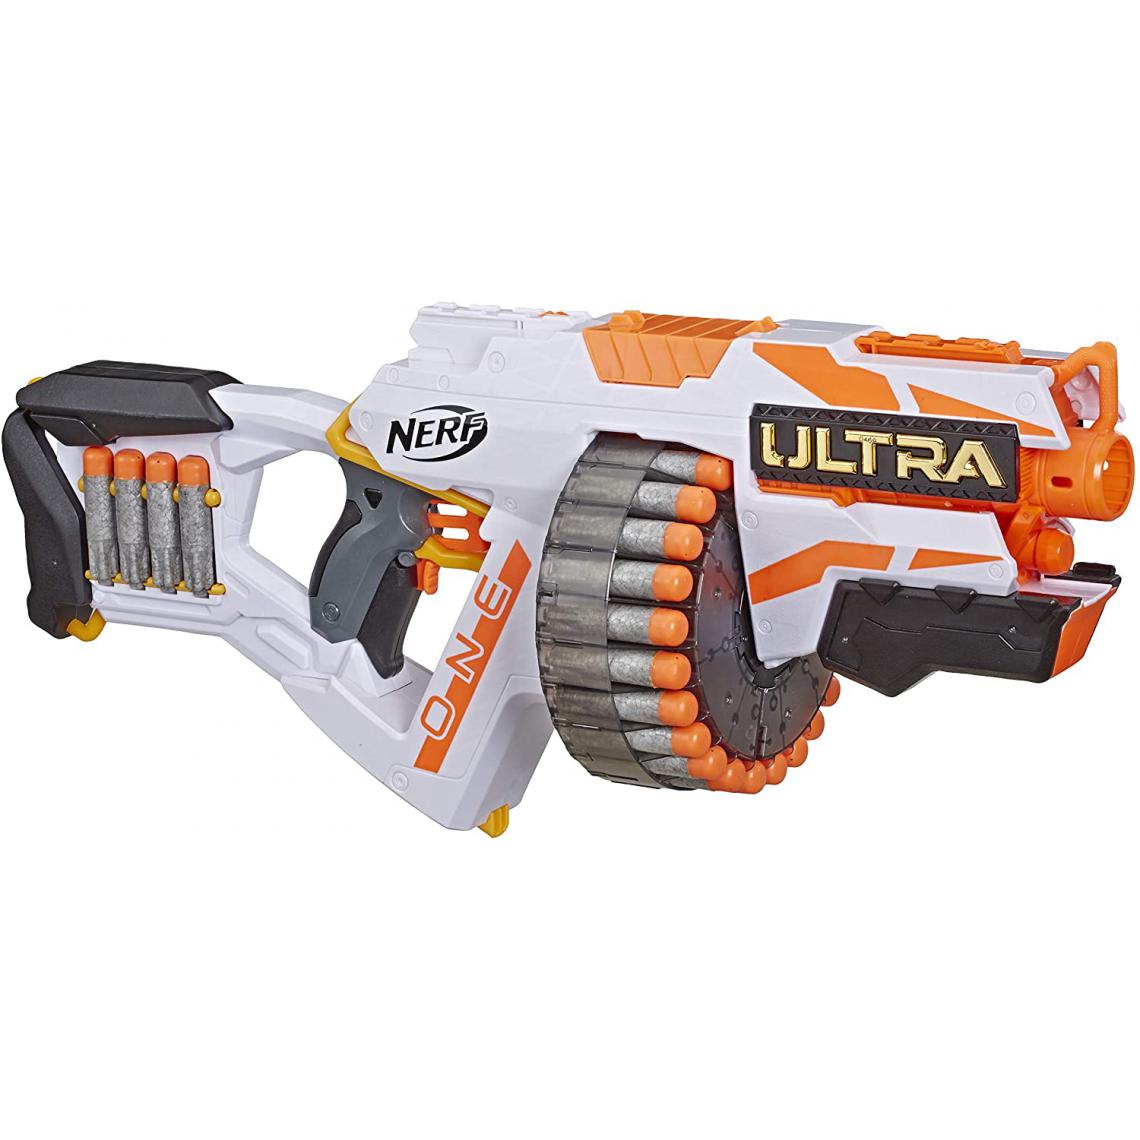 Nerf - pistolet Ultra One et Flechettes Nerf Ultra Officielles blanc noir orange - Jeux d'adresse